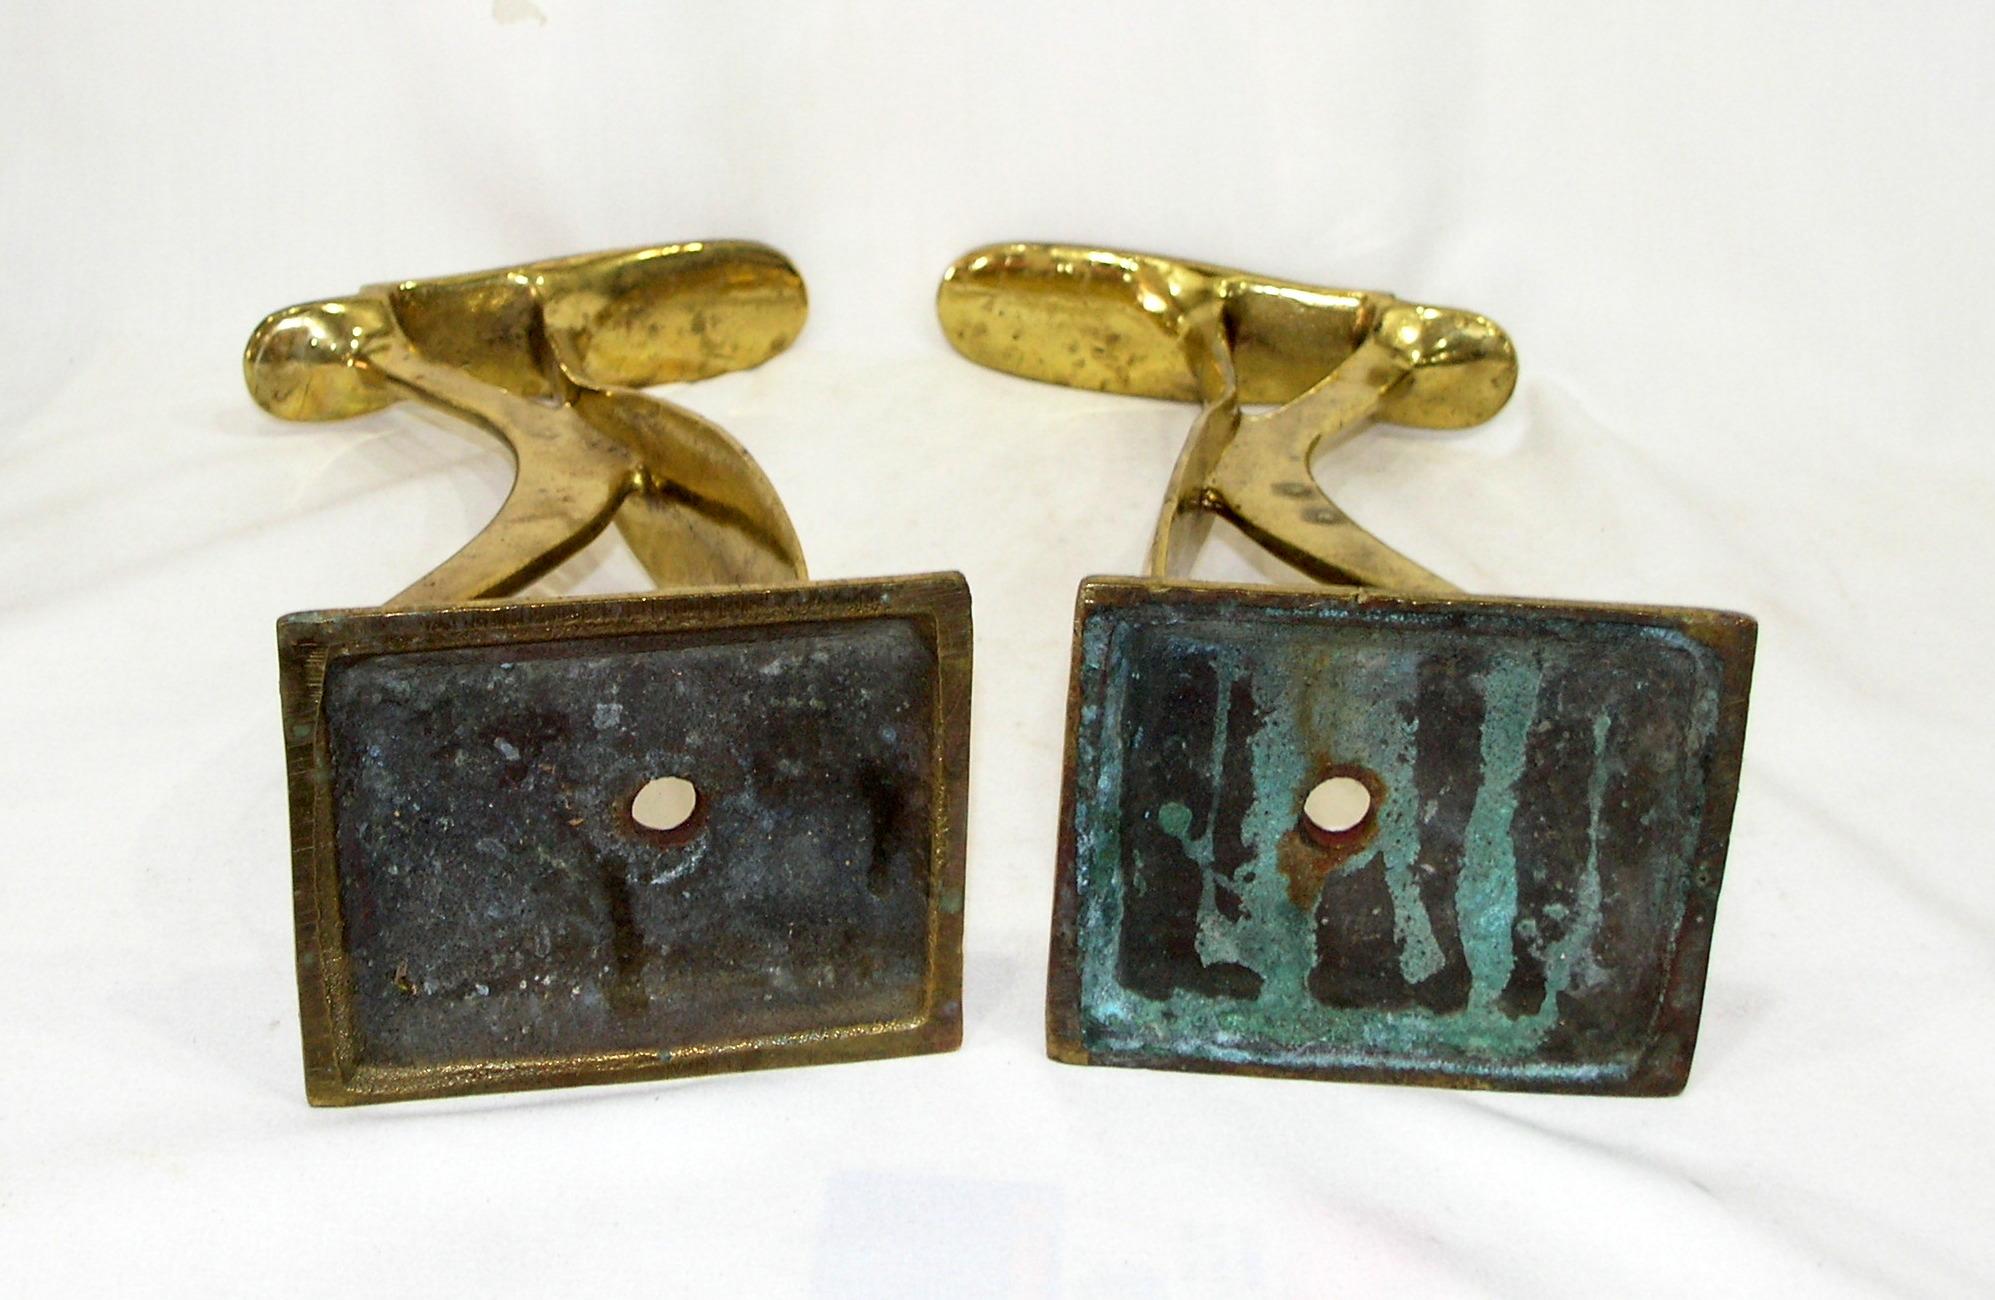 (2) Antique Solid Heavy Brass Shoe Shine Stands. Cobbler Shoe Form Stands U